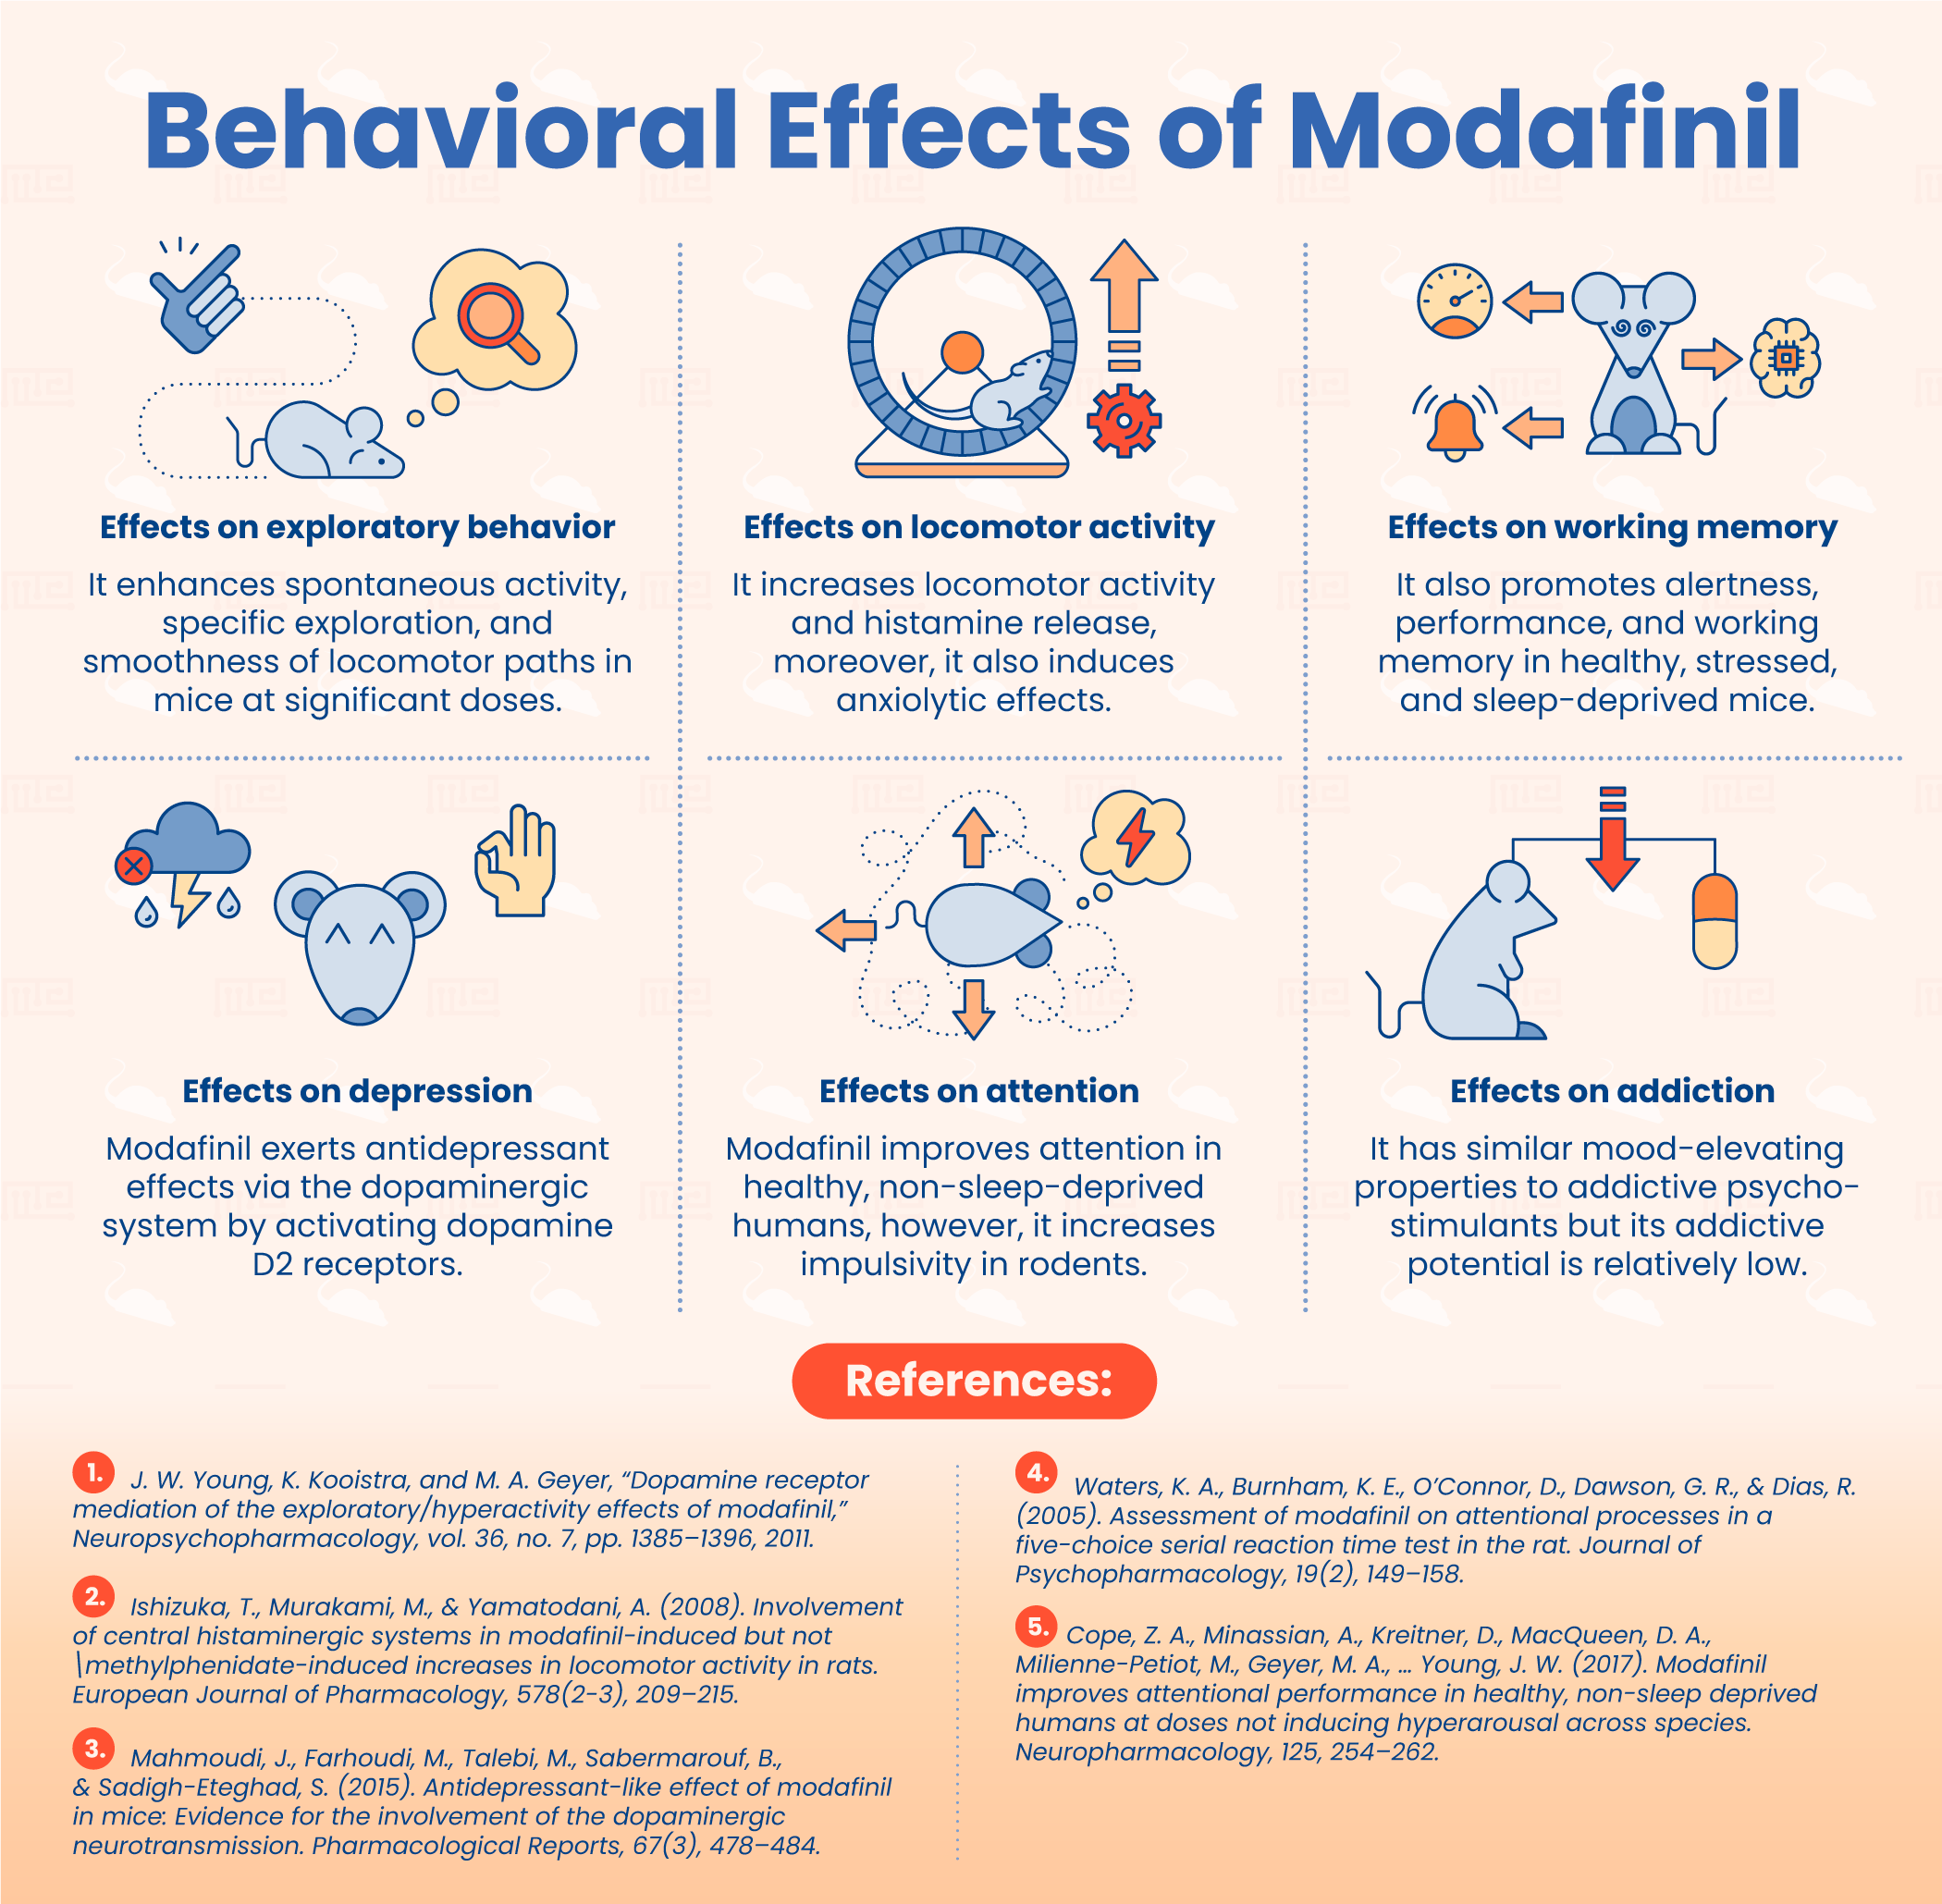 Modafinil Vs Adderall: Comparing Benefits And Risks